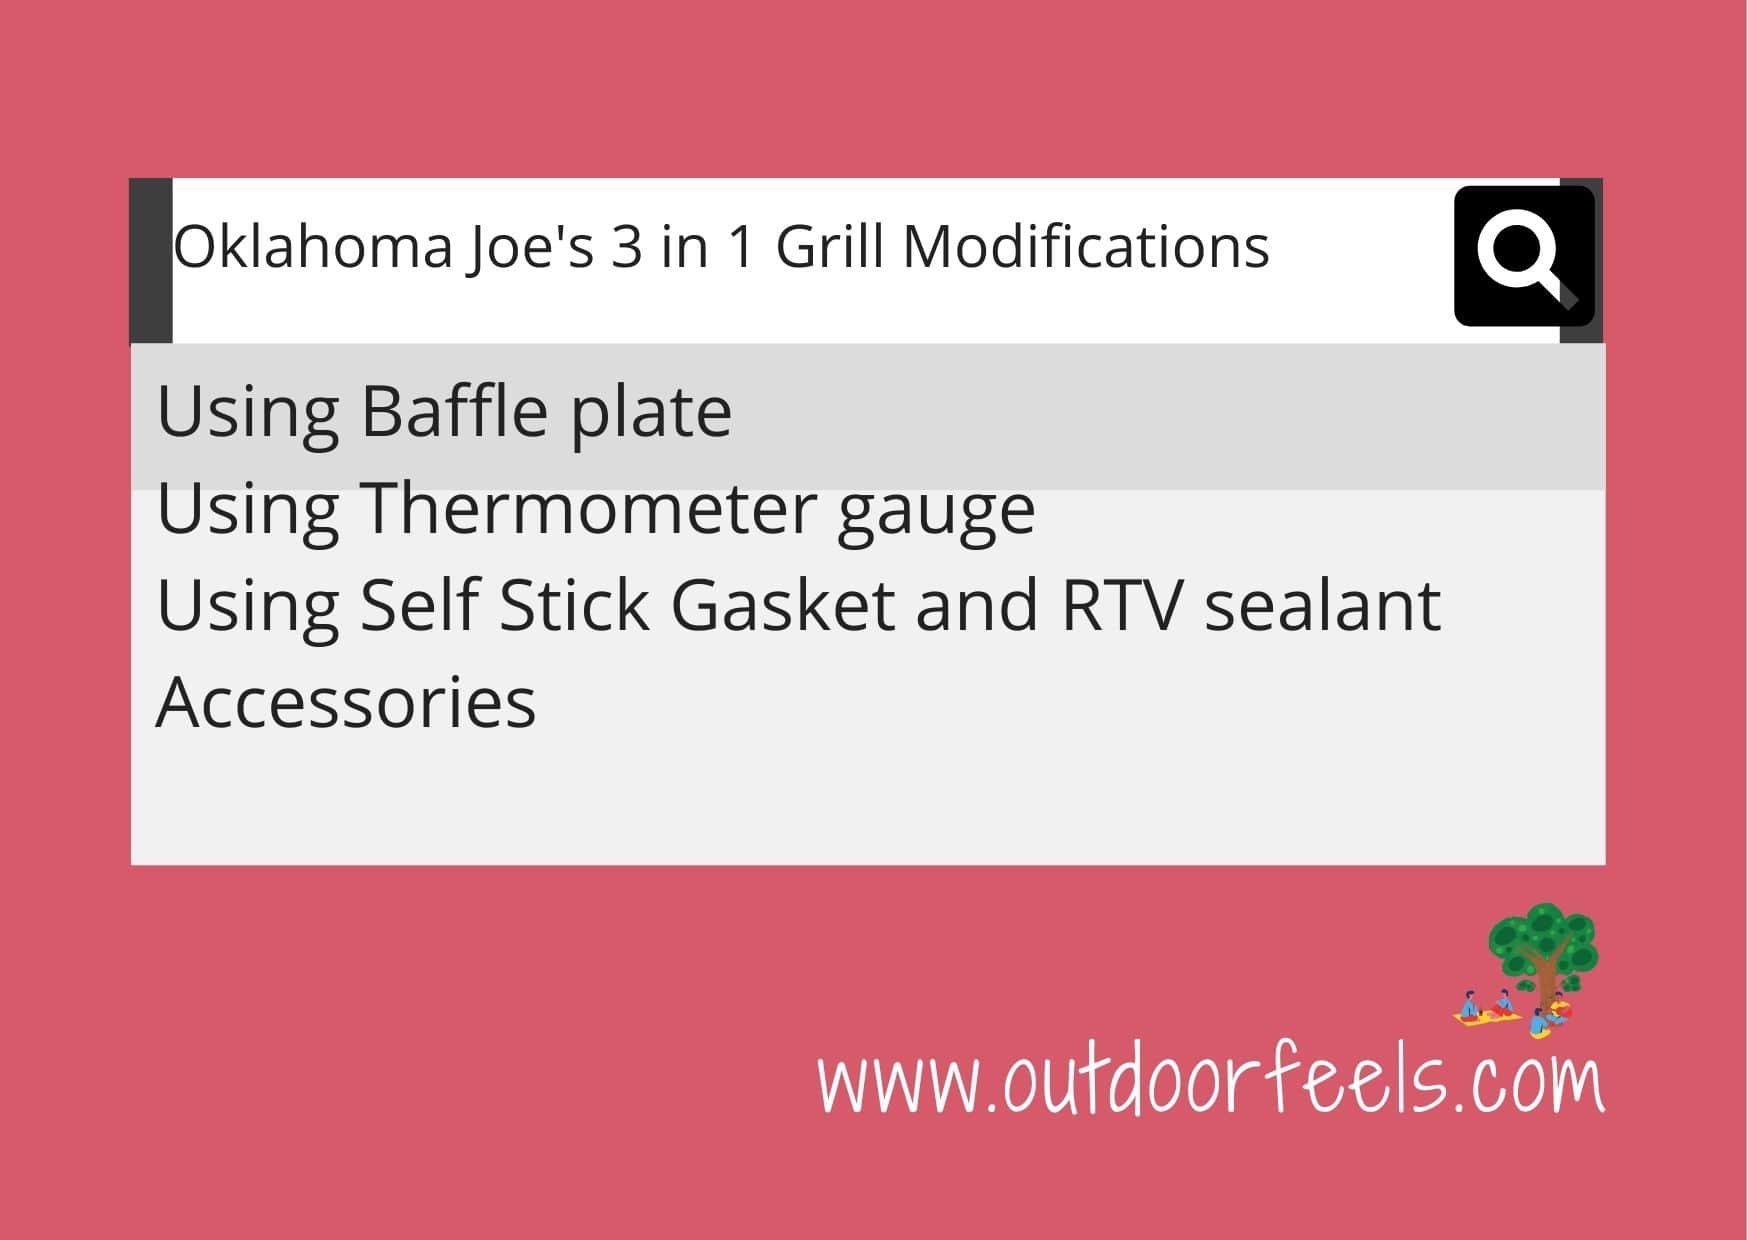 Oklahoma Joe's 3 in 1 Grill Modifications_Feature Image-min